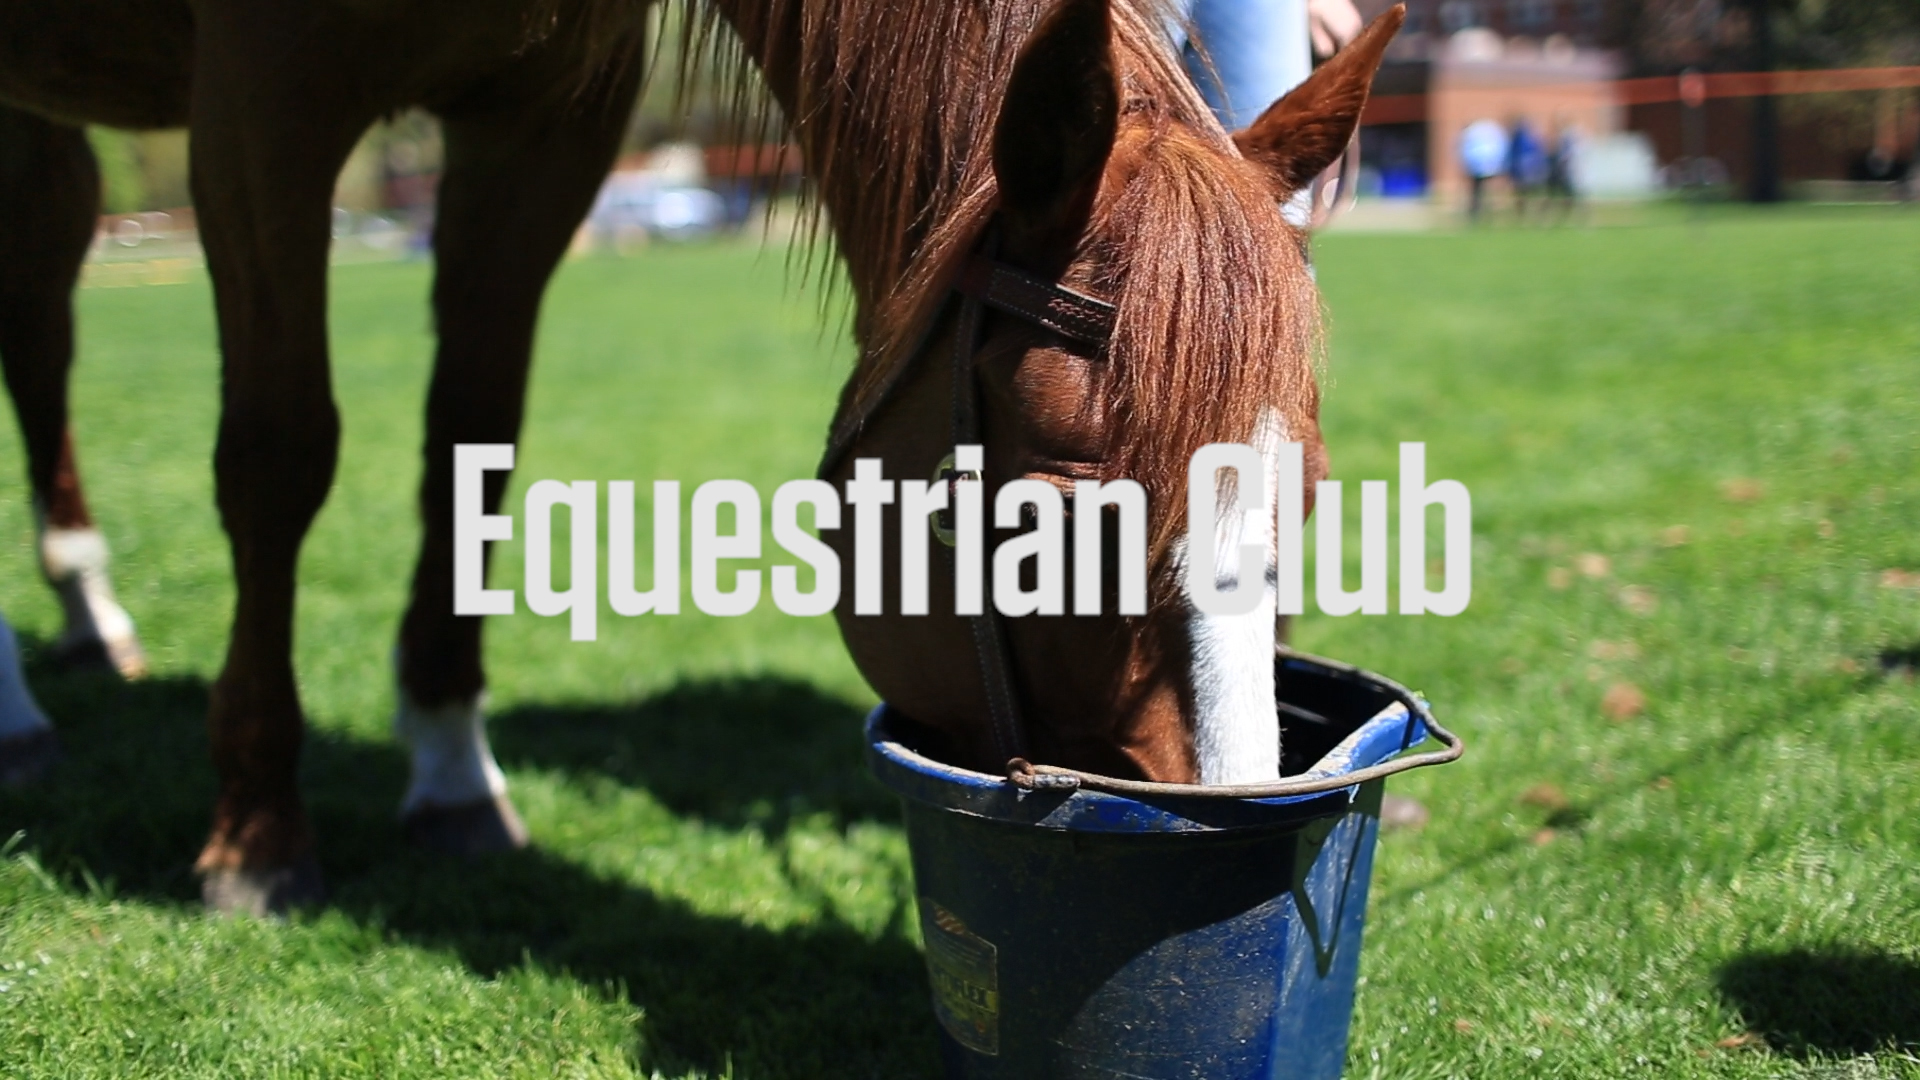 Knox College Equestrian Club Showcase on Earth Day